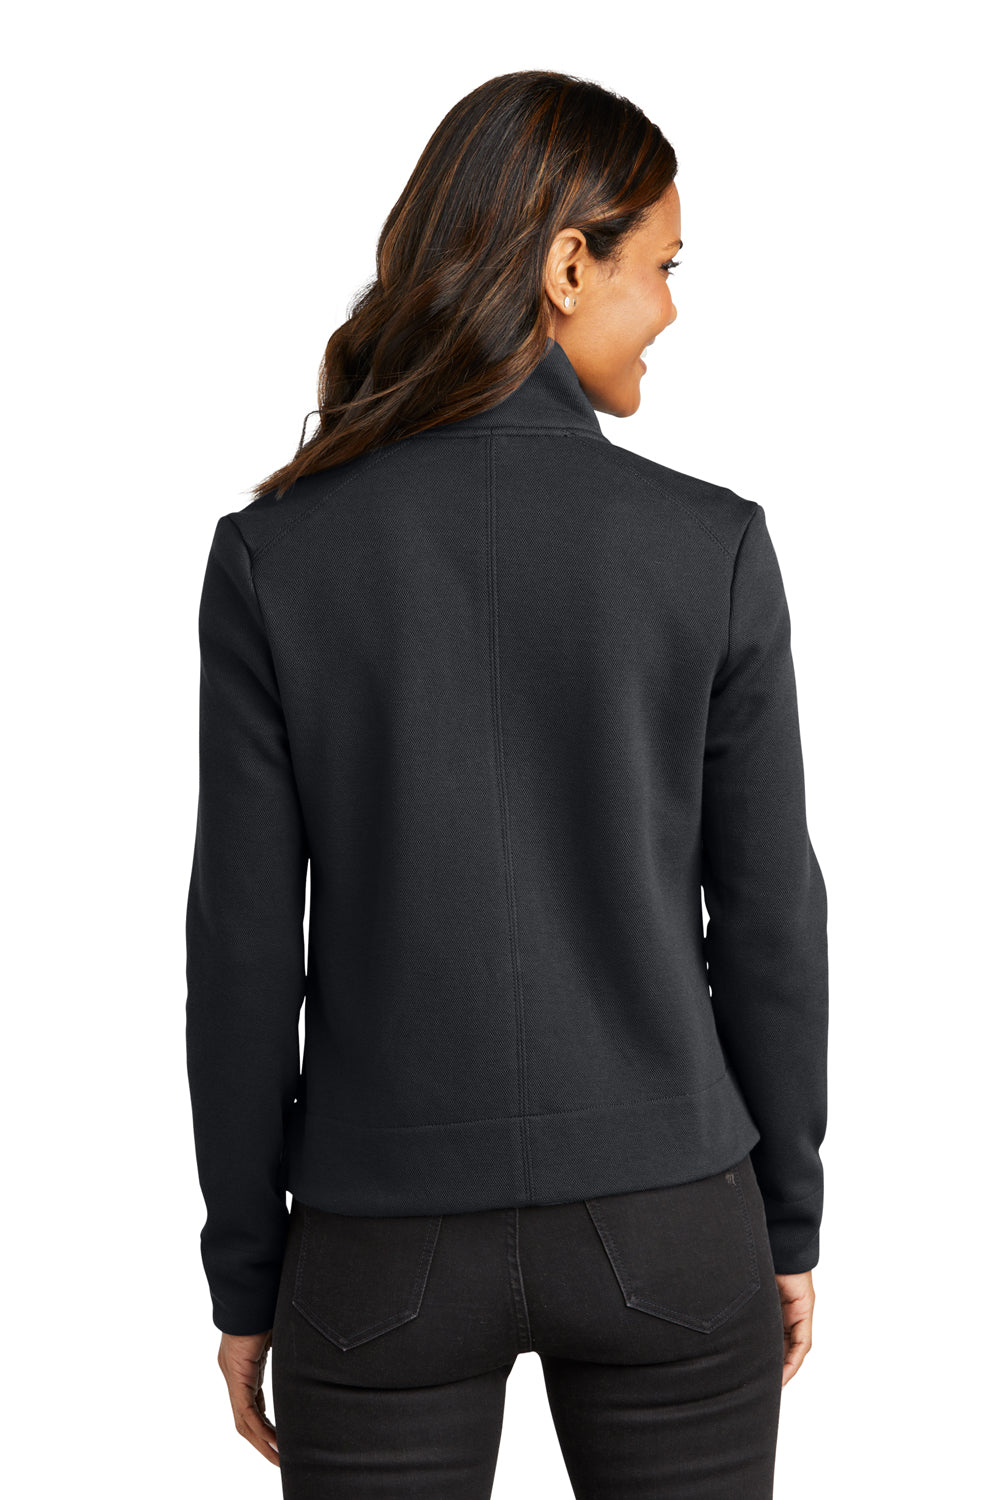 Port Authority L422 Womens Network Fleece Full Zip Jacket Charcoal Grey Back